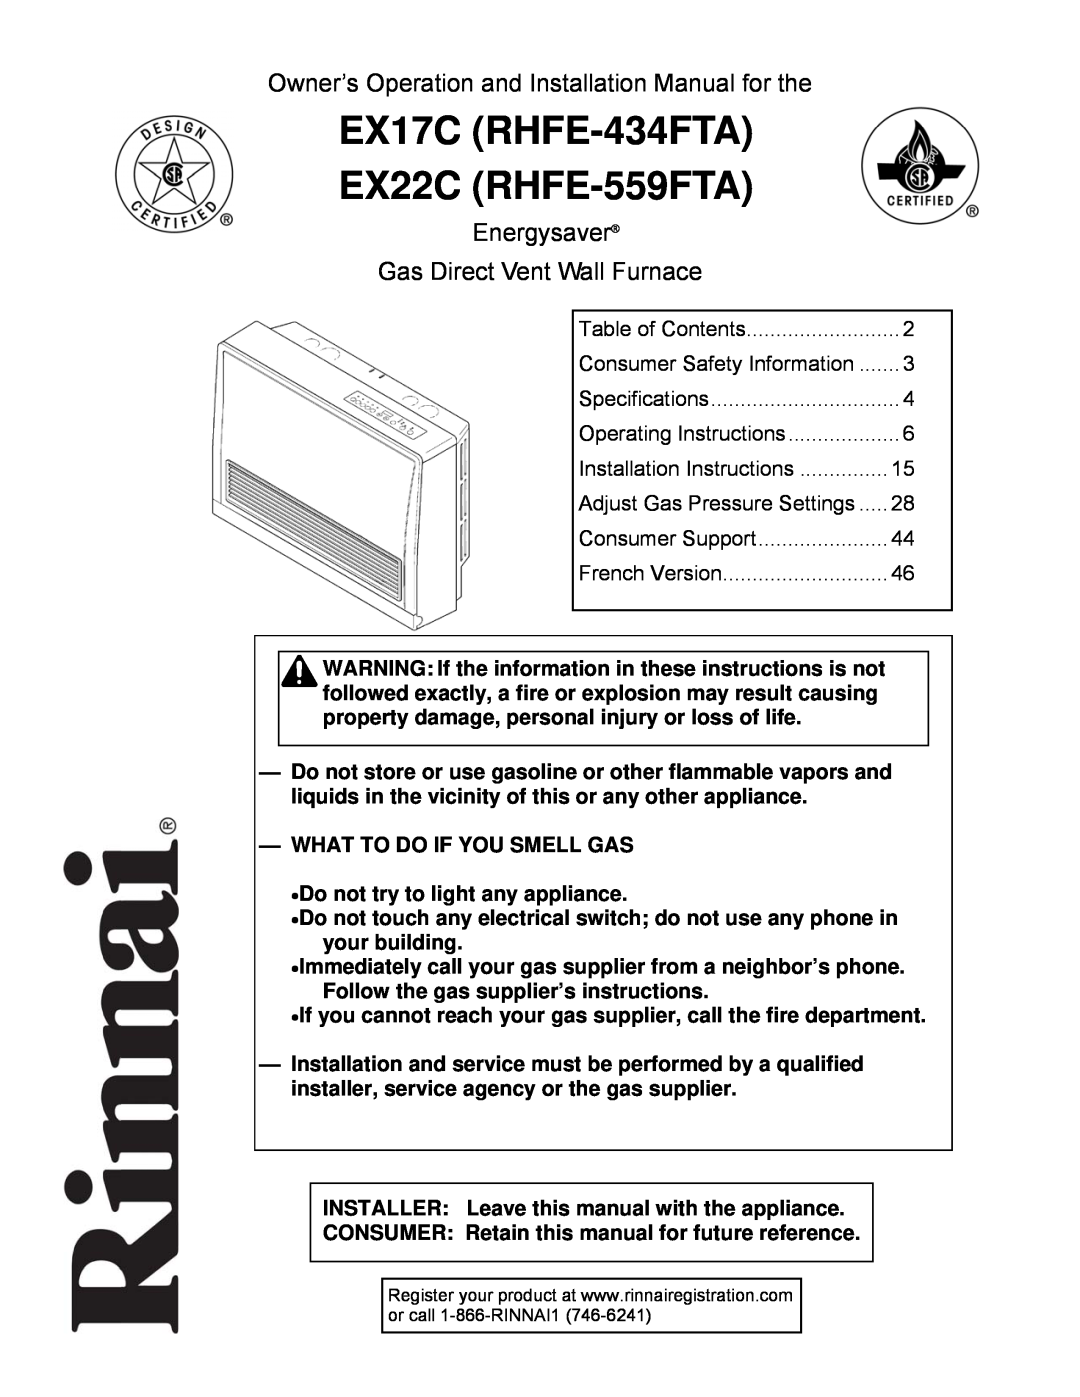 Rinnai installation manual EX17C RHFE-434FTA, EX22C RHFE-559FTA, Owner’s Operation and Installation Manual for the 